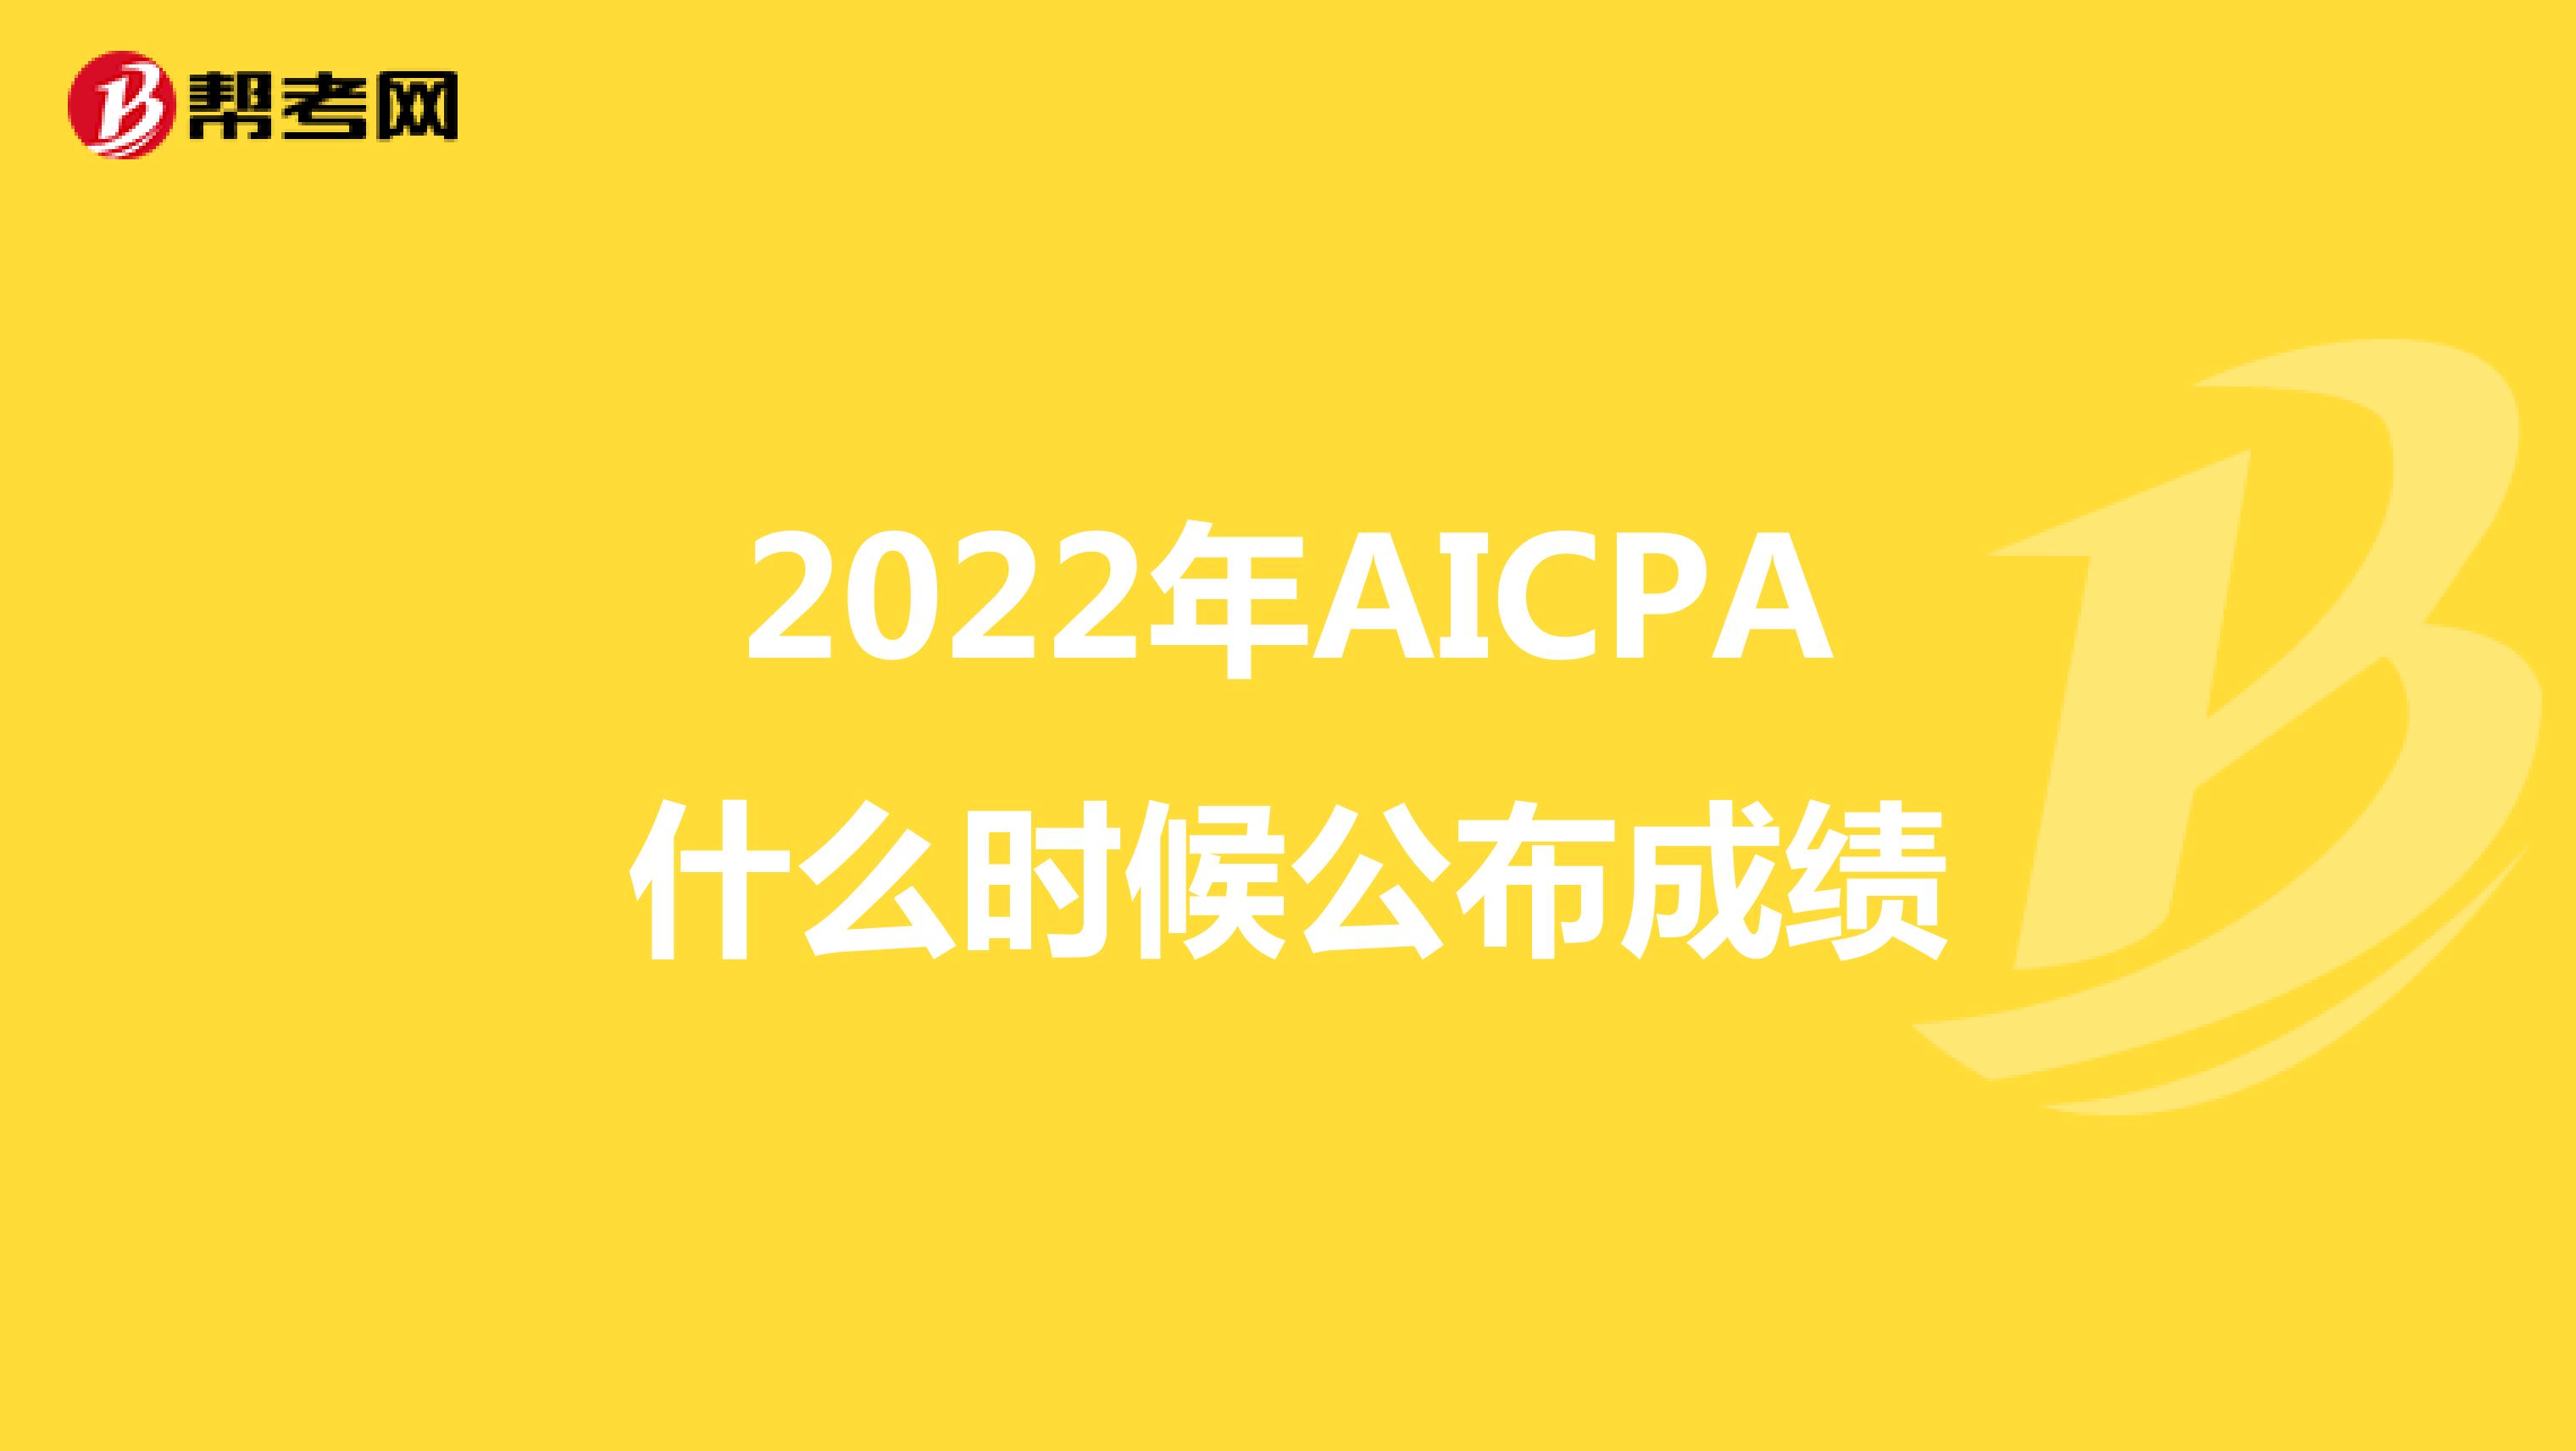 2022年AICPA什么时候公布成绩